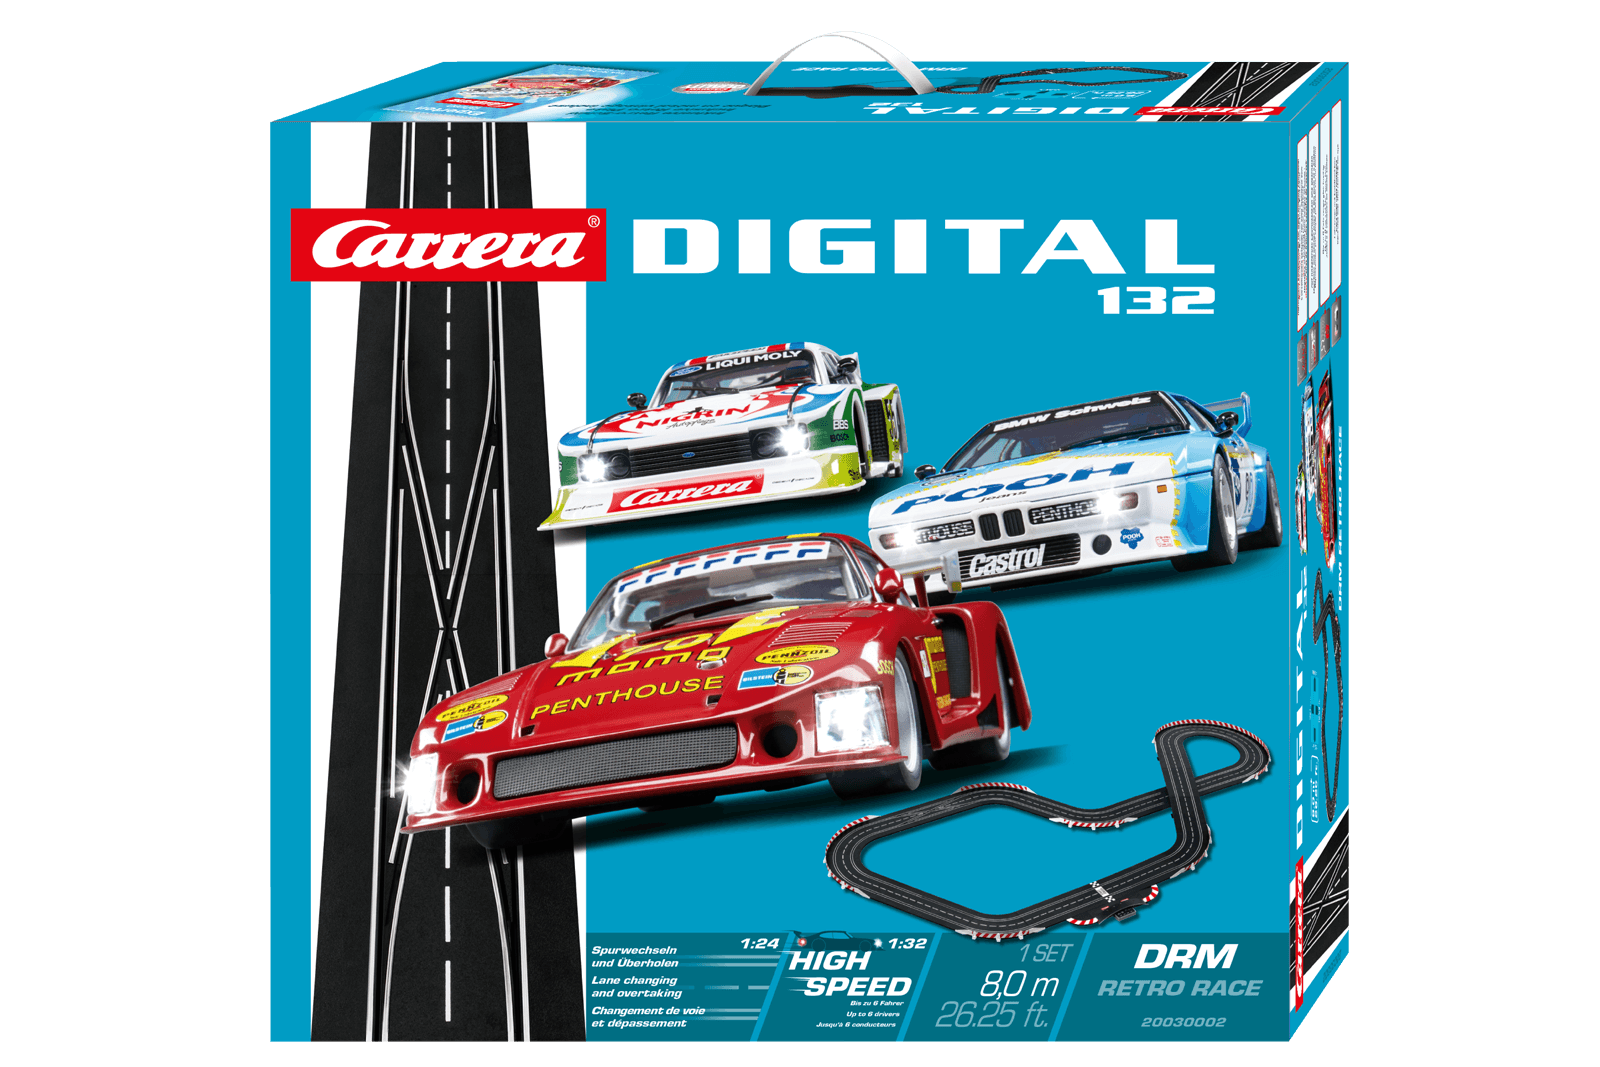 Carrera Digital 132 DRM Retro Race Slot Set with 3 Cars - CARRERA